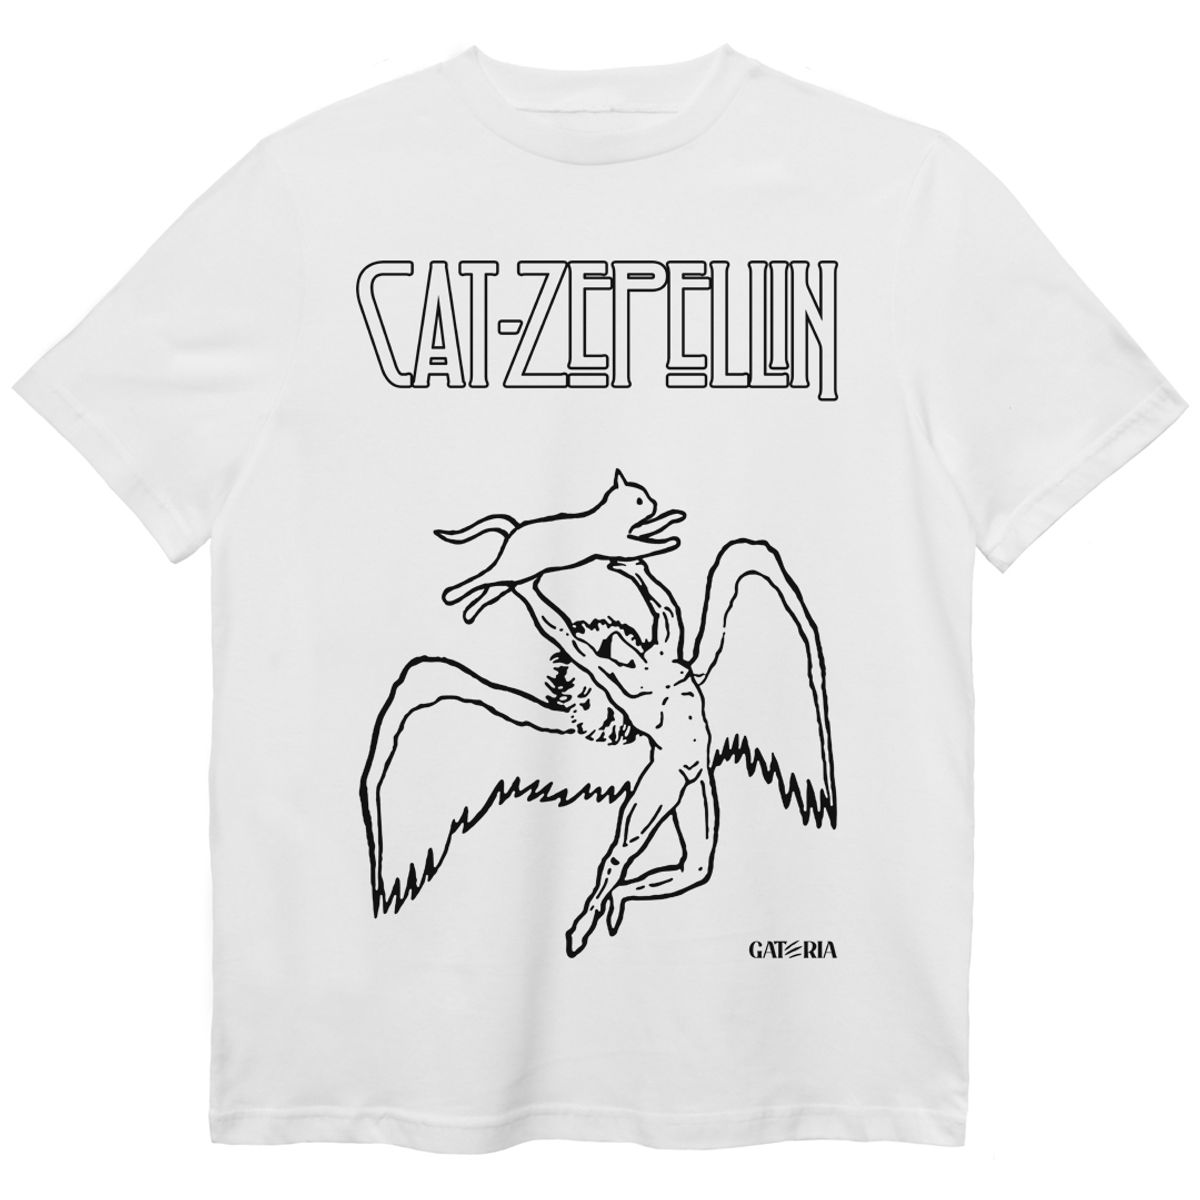 Nome do produto: Camiseta Cat Zeppelin - Branco